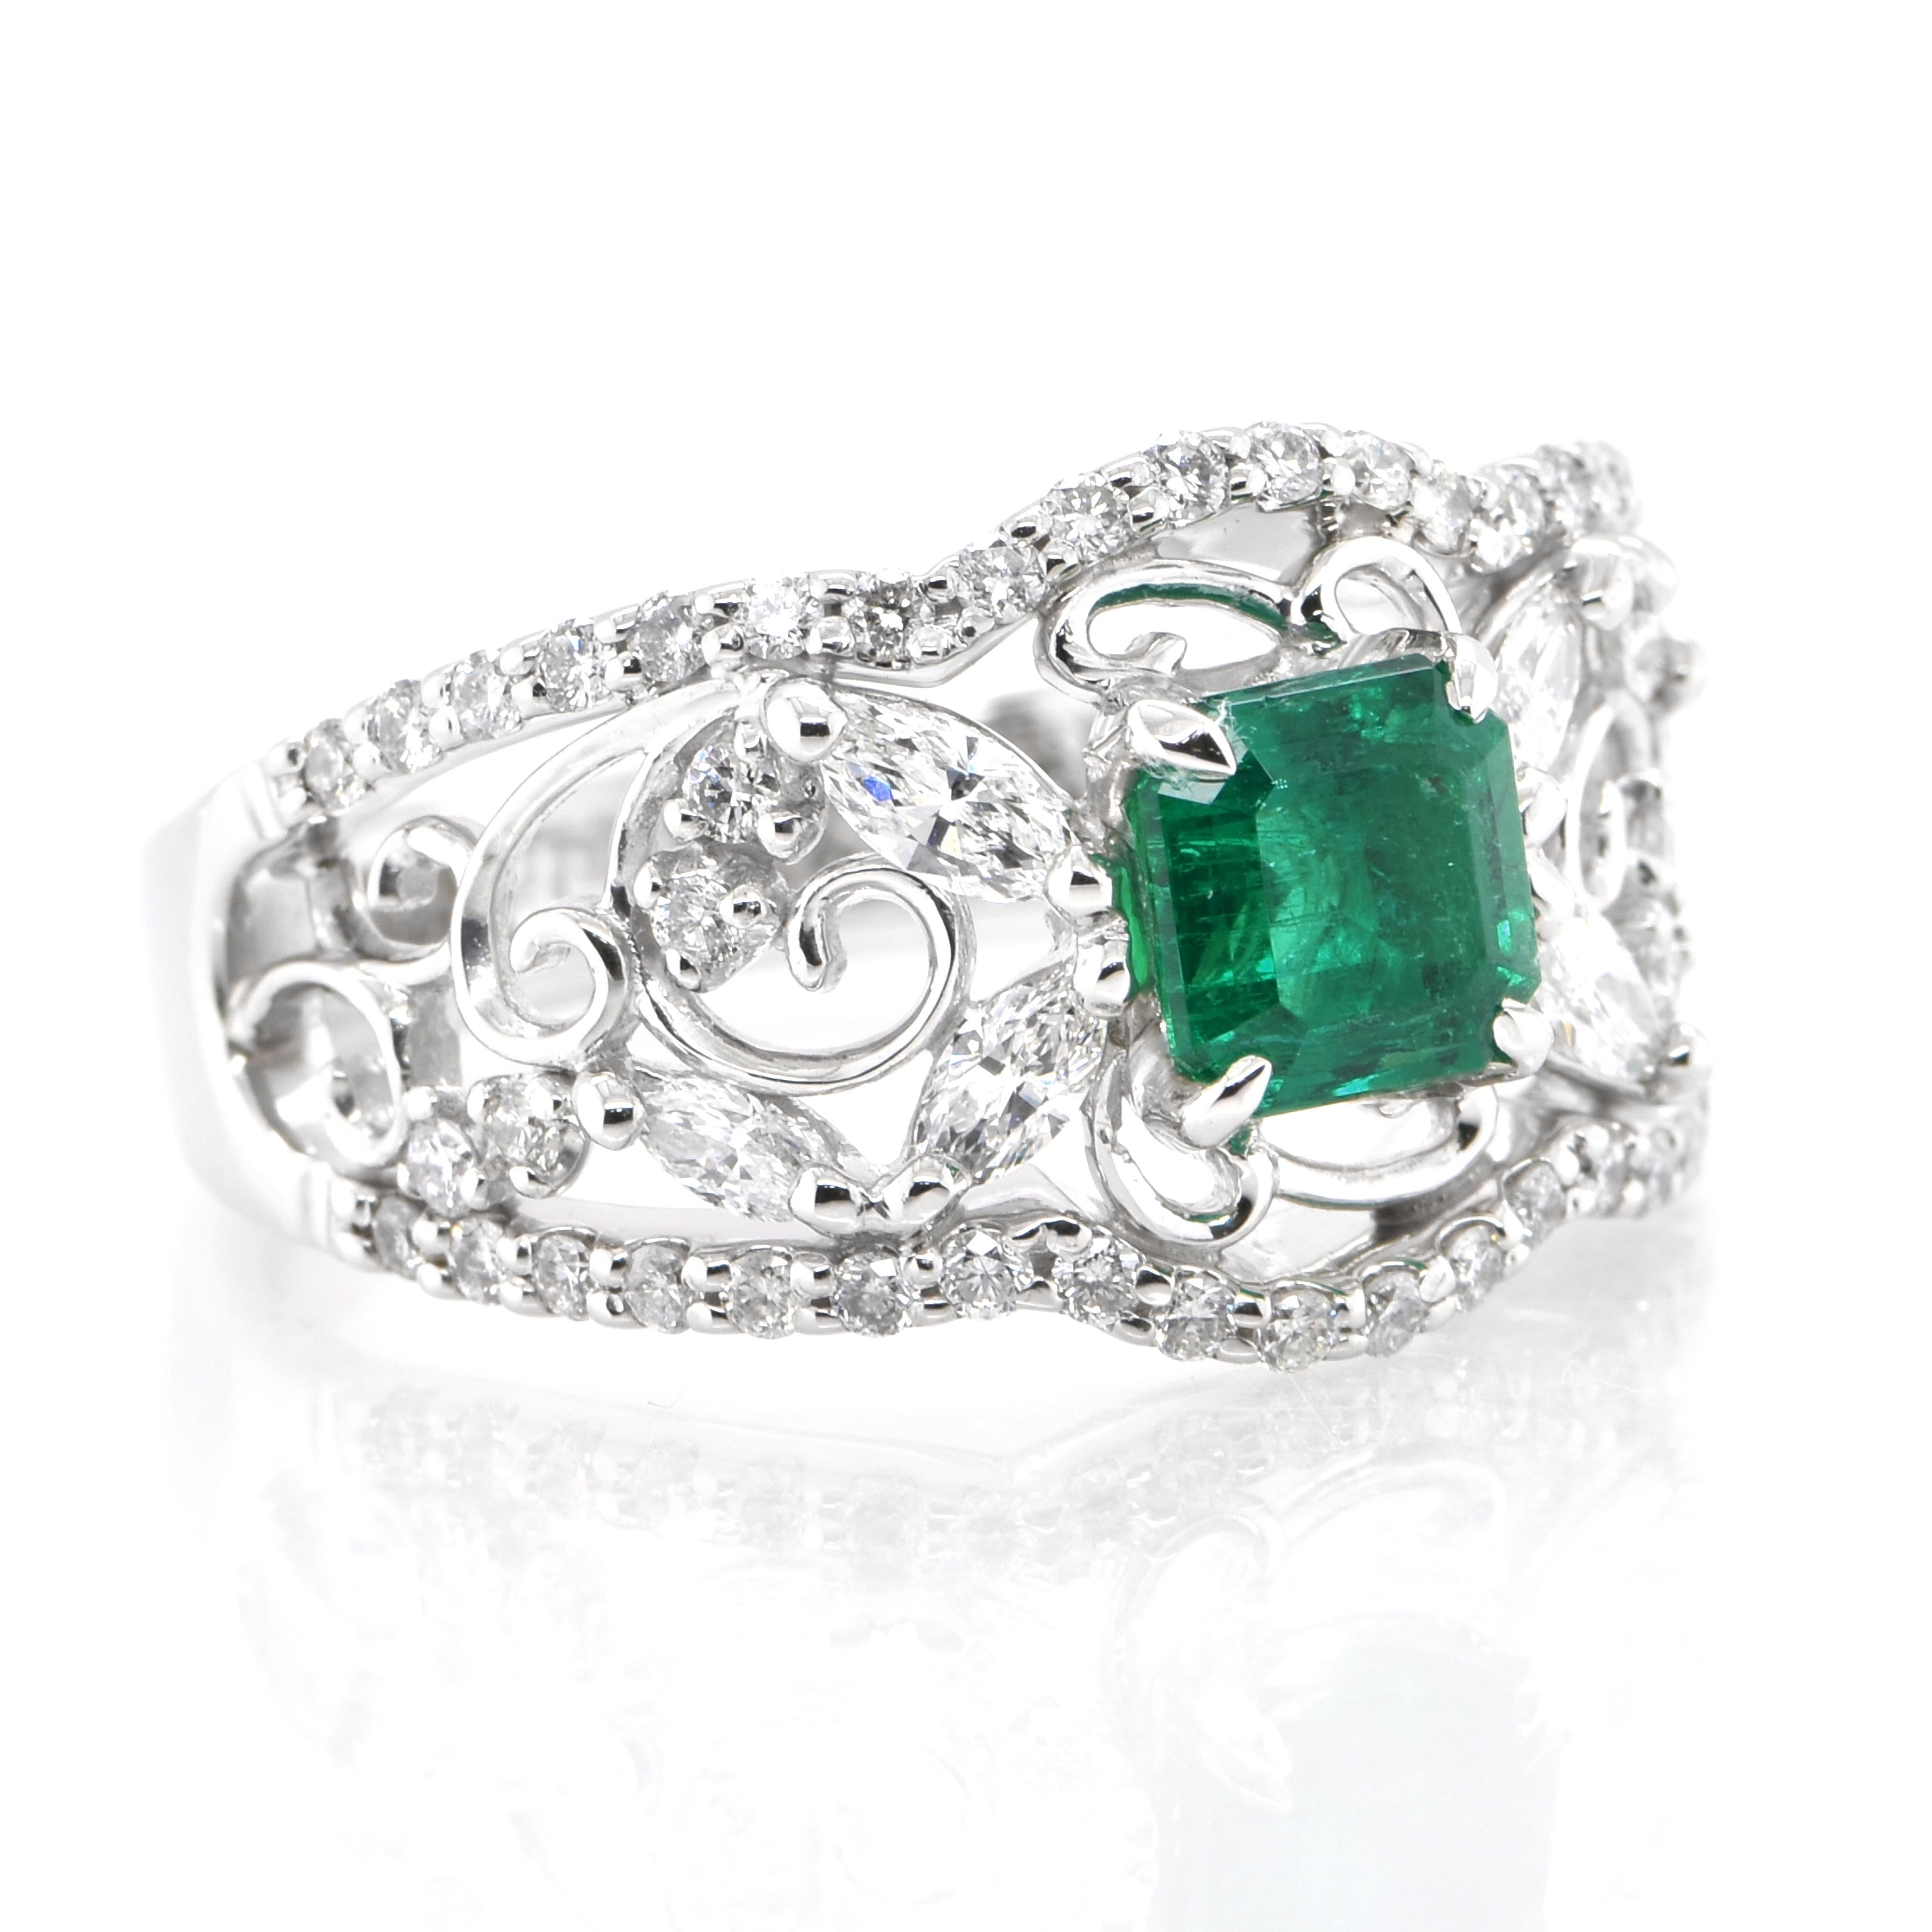 Modern 0.86 Carat Natural Vivid Green Emerald and Diamond Ring Set in Platinum